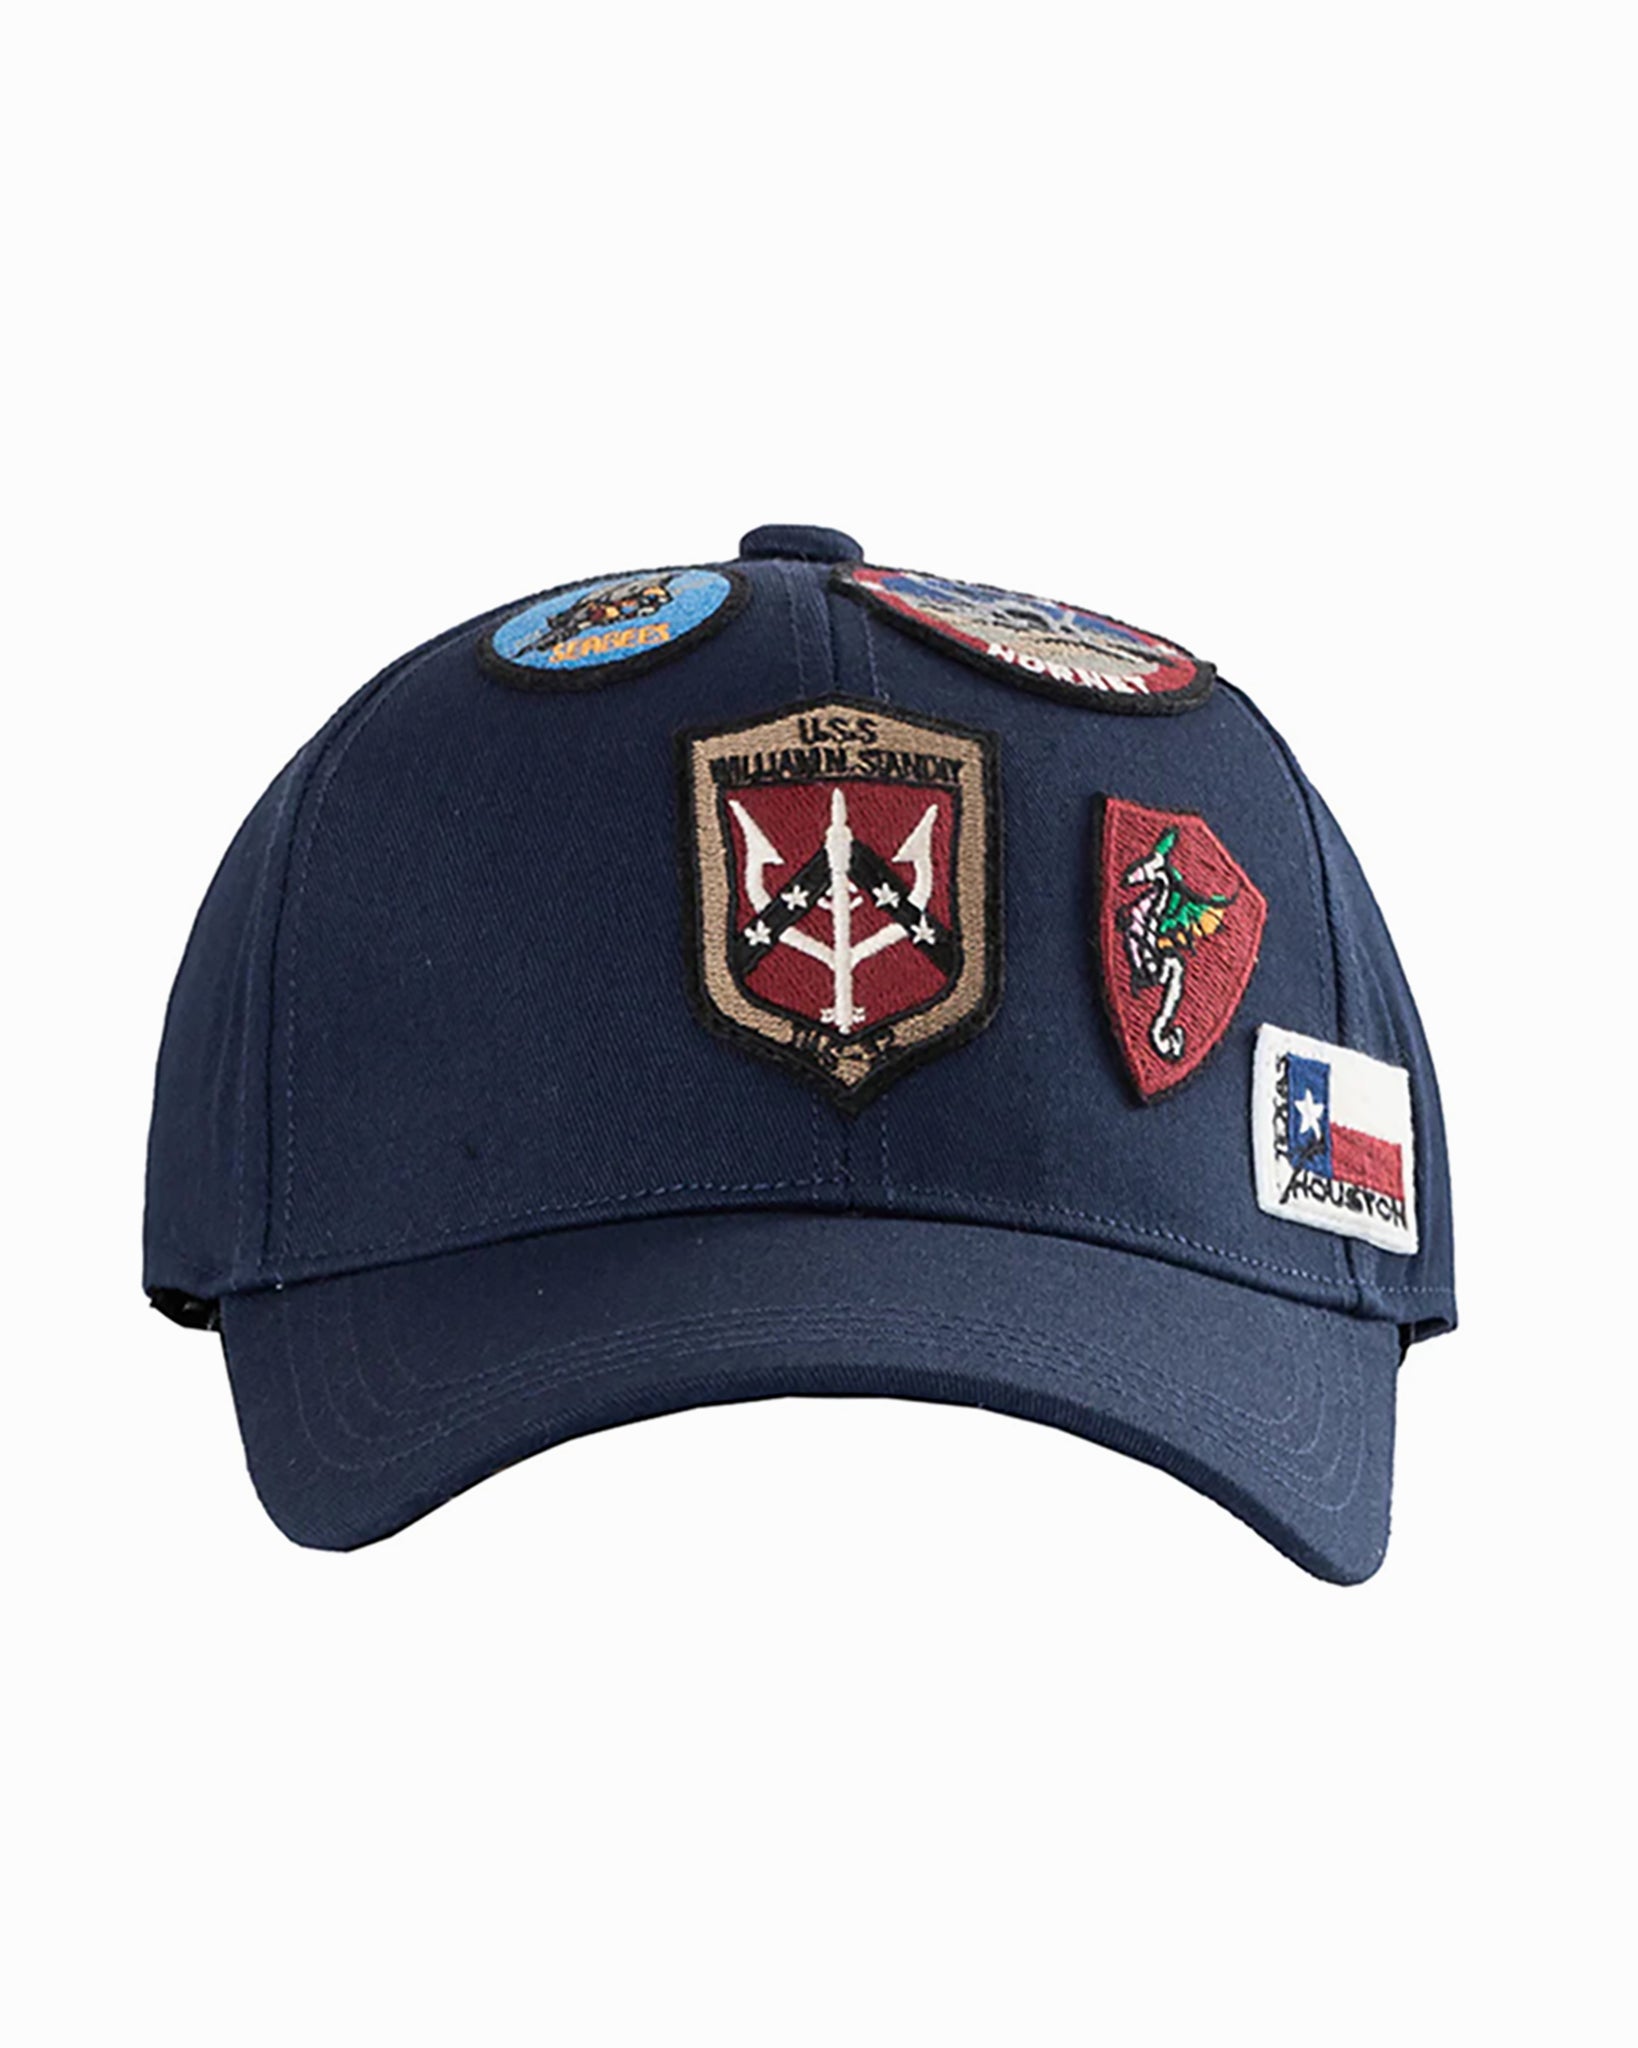 Store Gun Hat, – Maverick Official and Store Gun: Trucker Caps More | Beanie, Cap, Top Top |